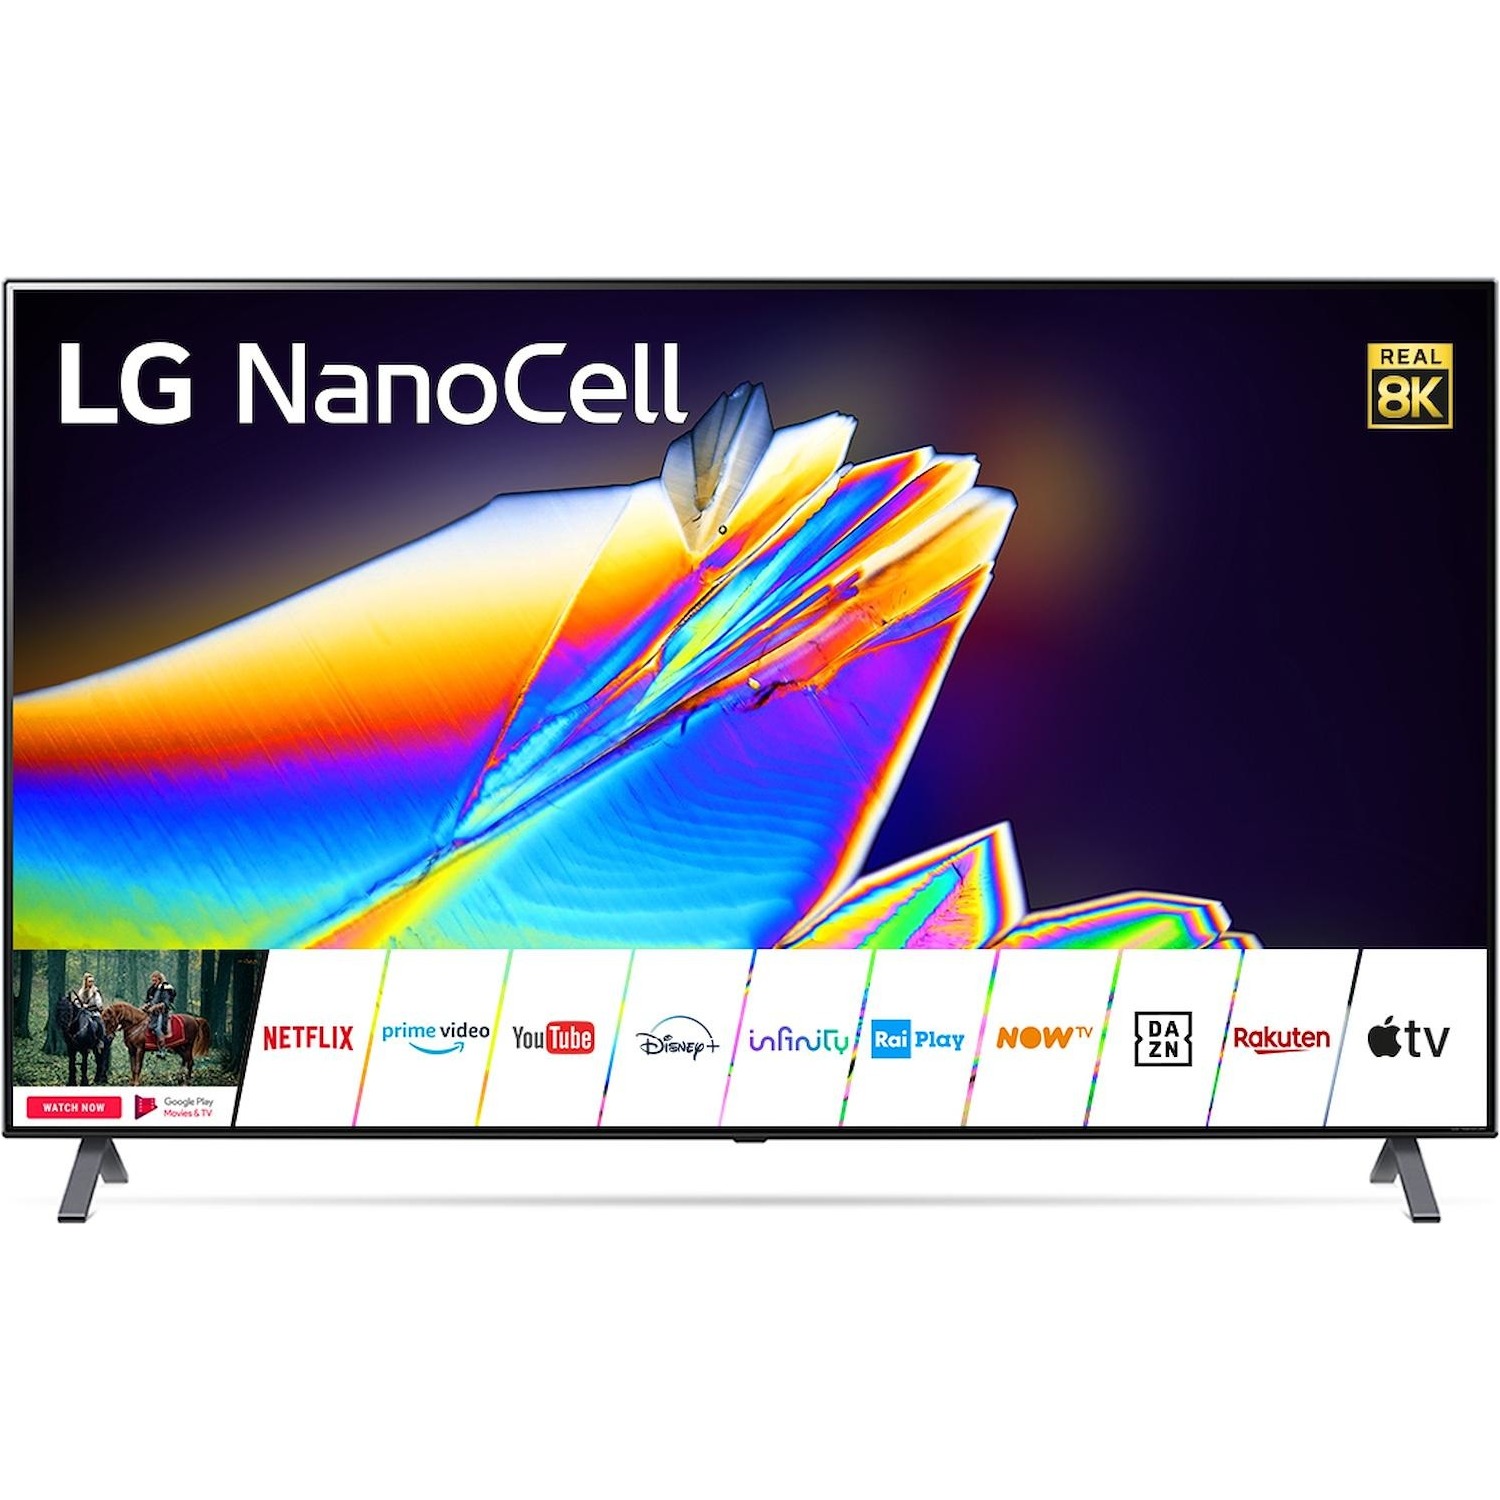 Immagine per TV LED LG 65NANO956 Calibrato 4K e FULL HD da DIMOStore